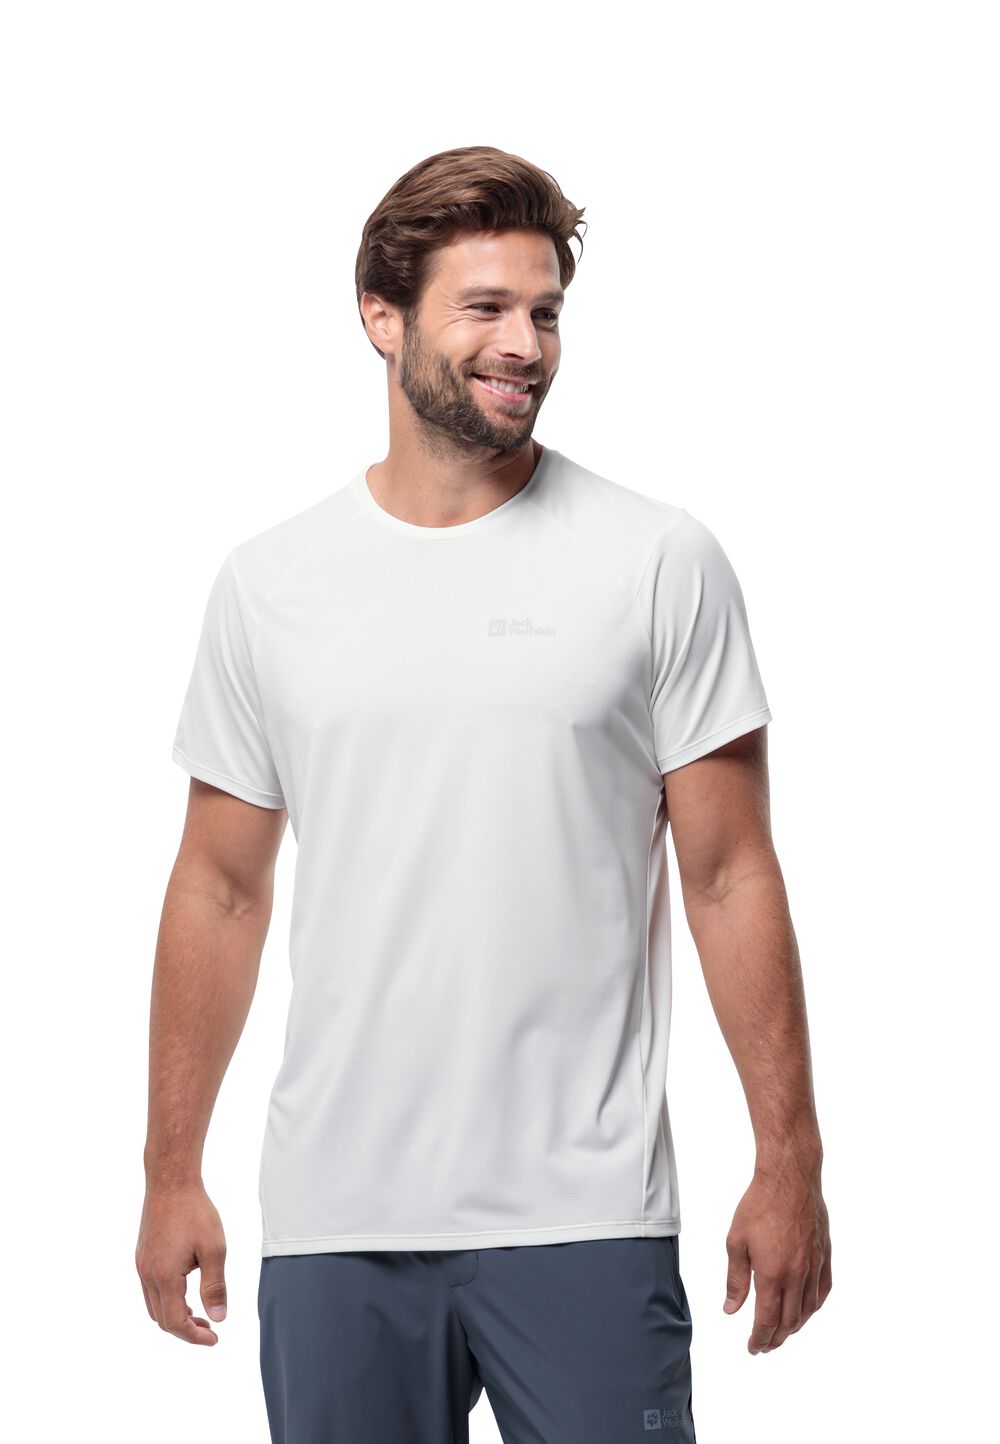 Jack Wolfskin Prelight Trail T-Shirt Men Functioneel shirt Heren M wit stark white